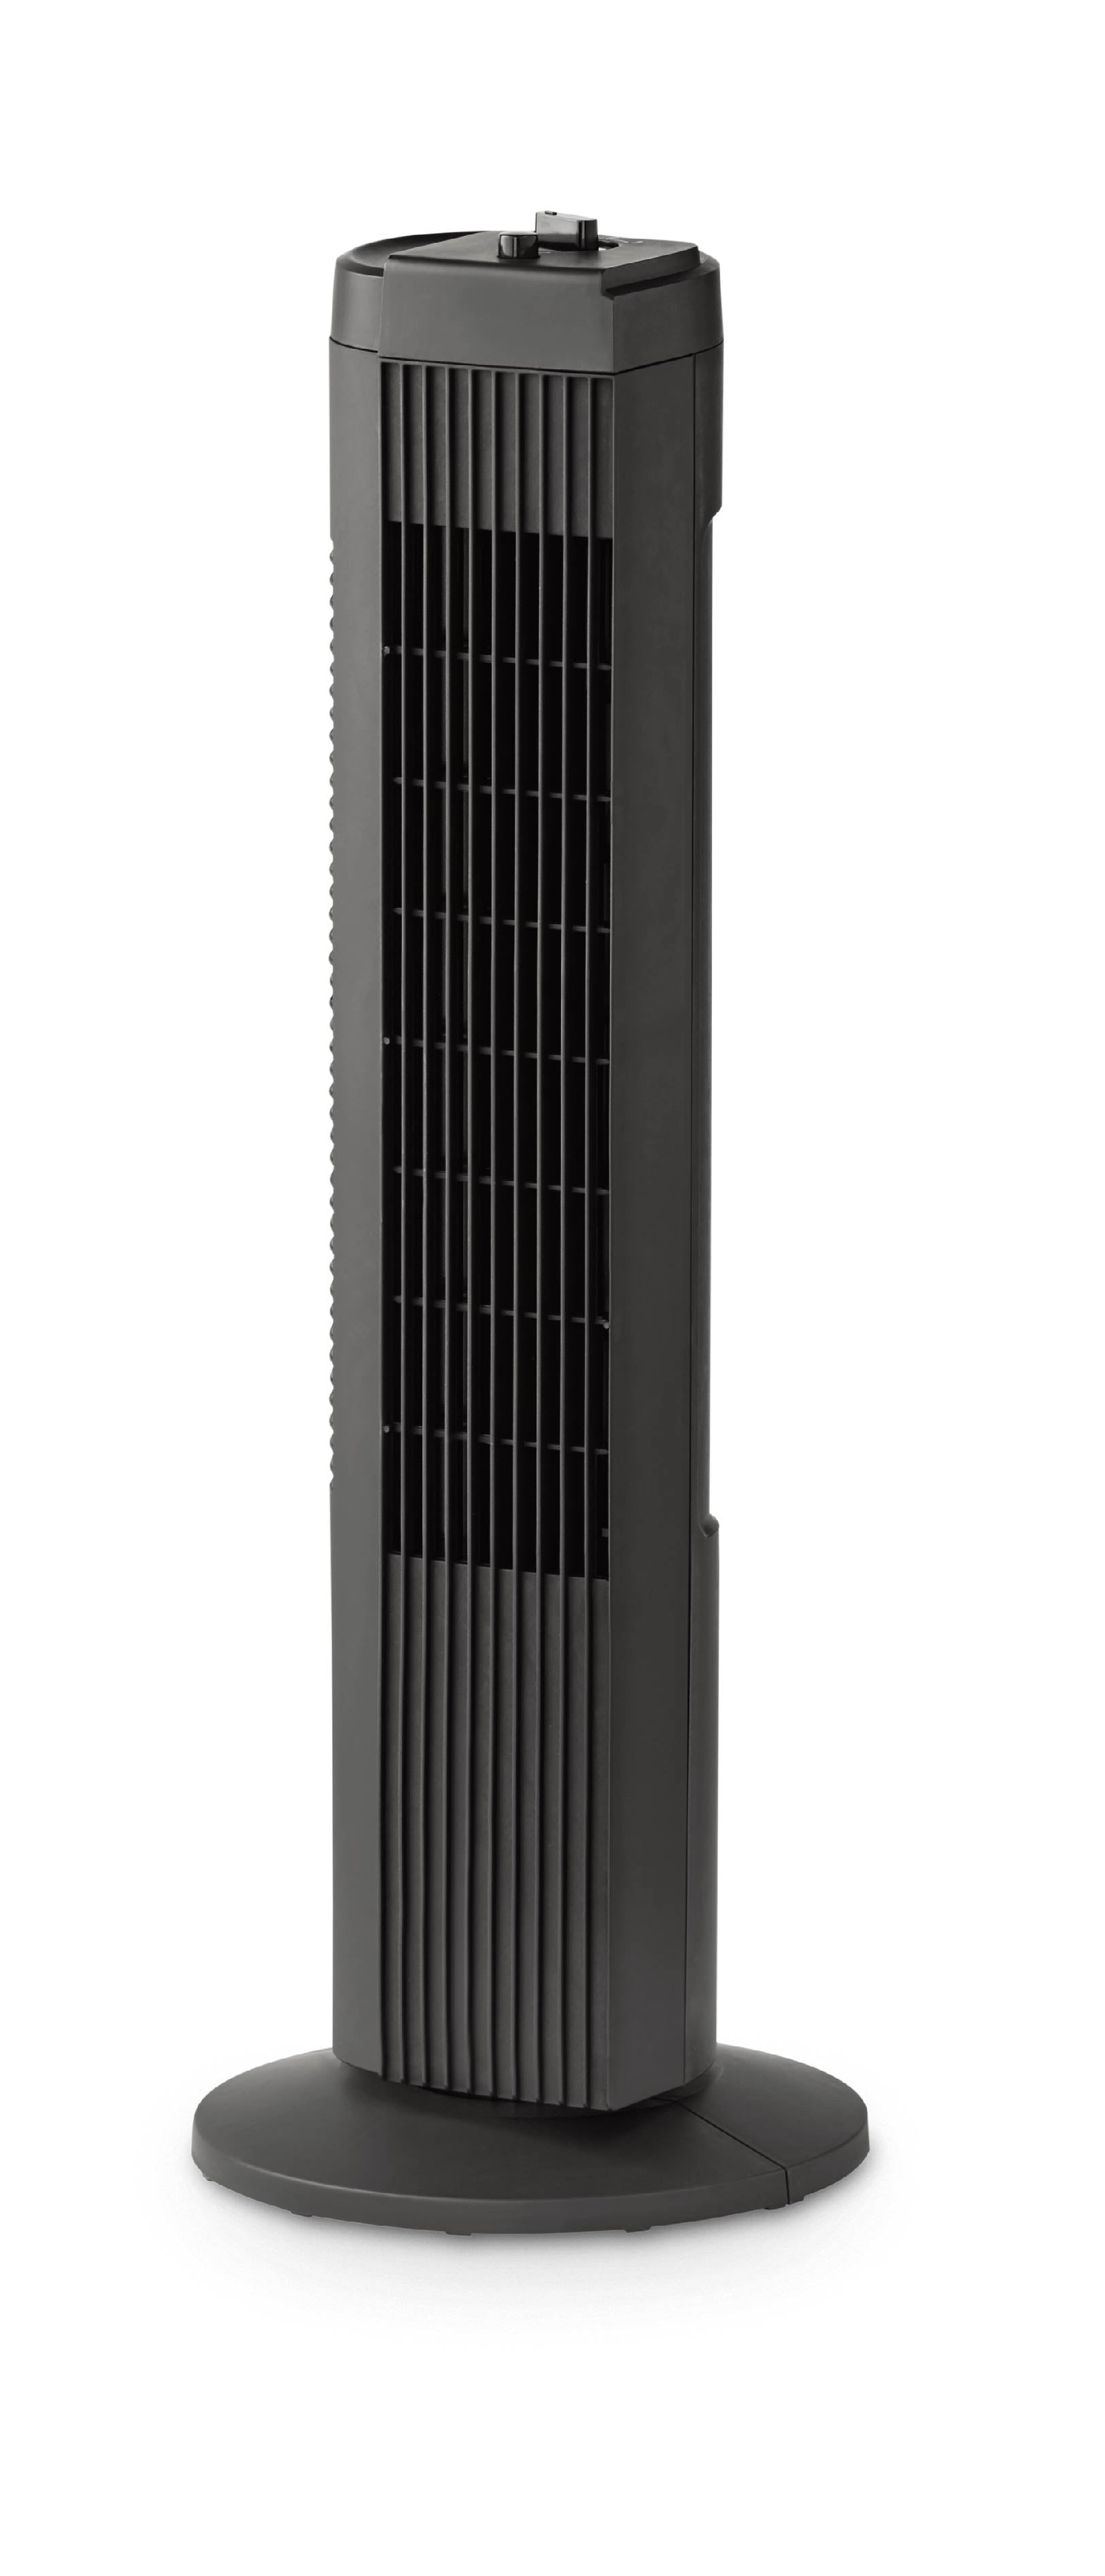 PowerZone Oscillating Fan Tower 0.45 A 120 Vac 60 Hz 3 Speeds